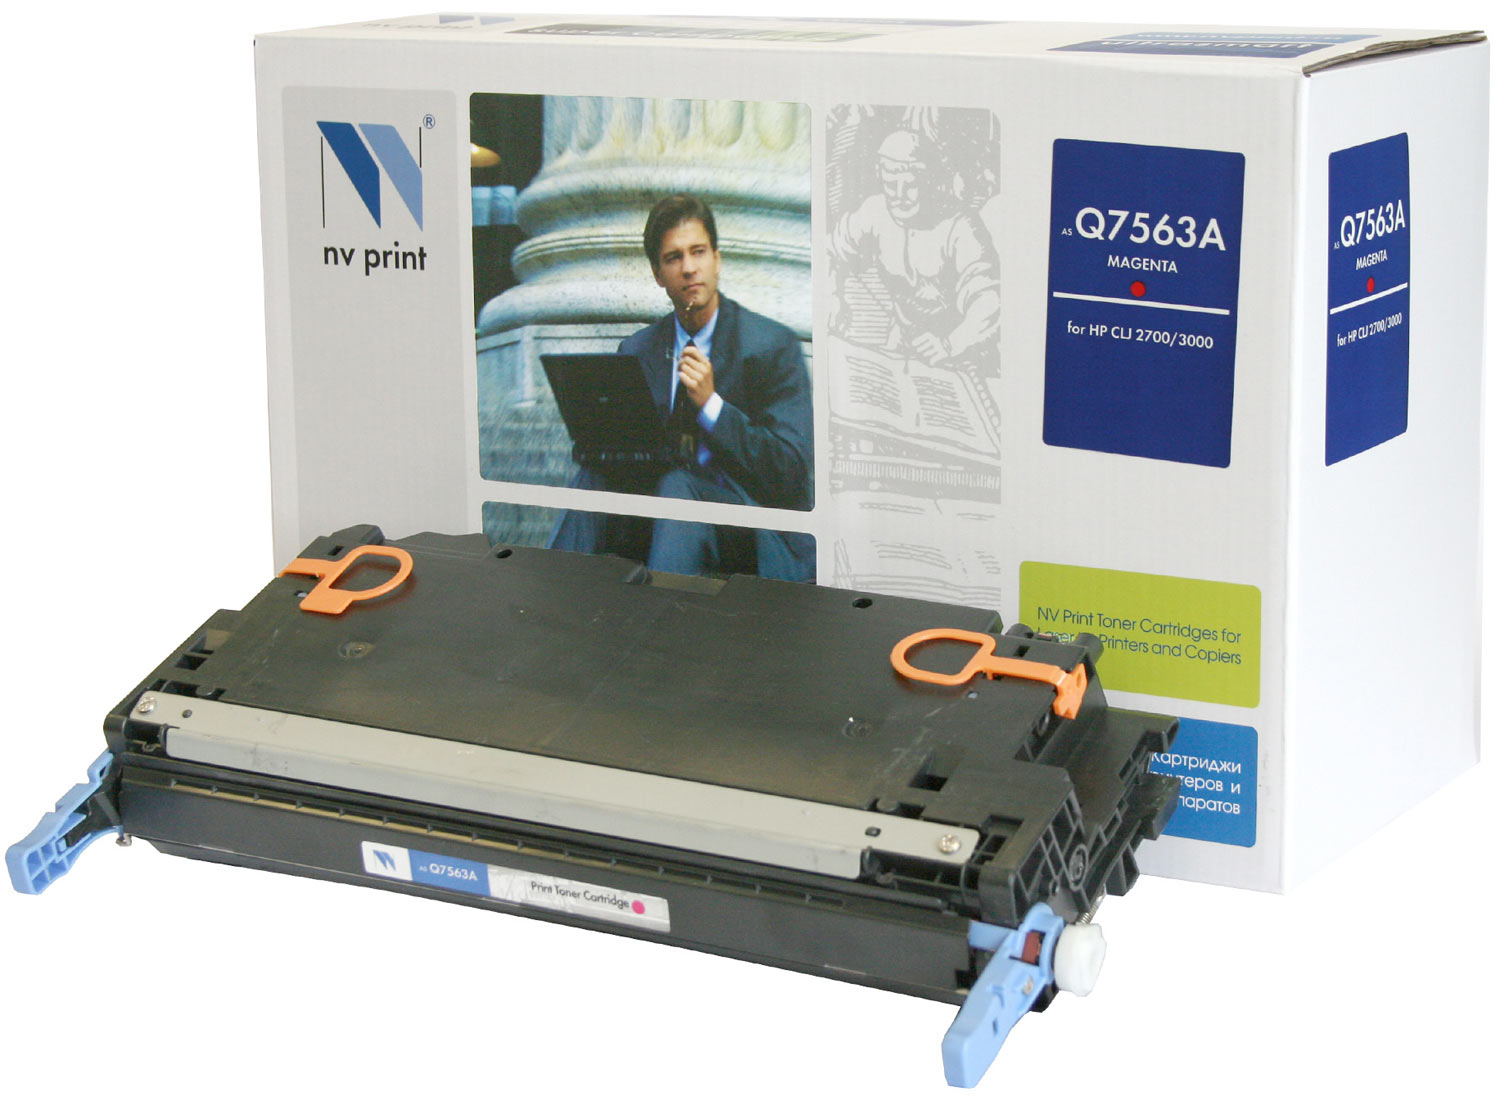 Картридж HP NV-Print (Q7563A Magenta) (3,5К) для LJ 2700/3000 пурпурный